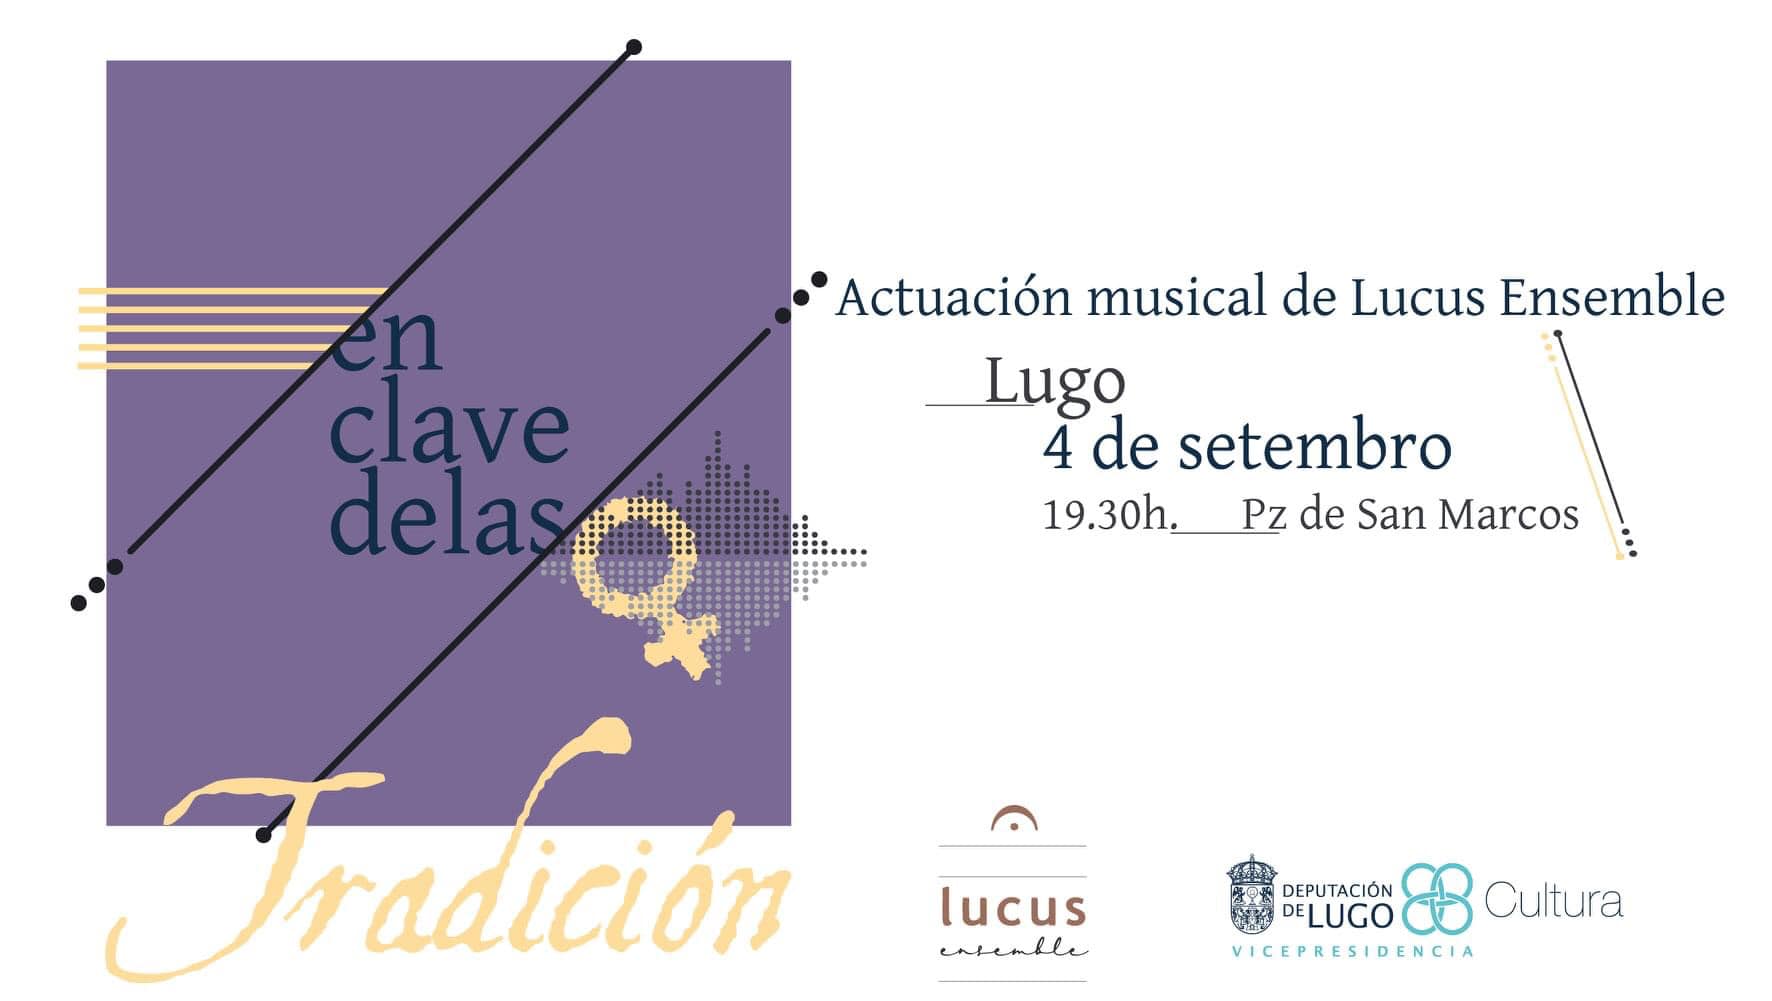 Concerto de Lucus Ensemble - Tradición. En Clave Delas